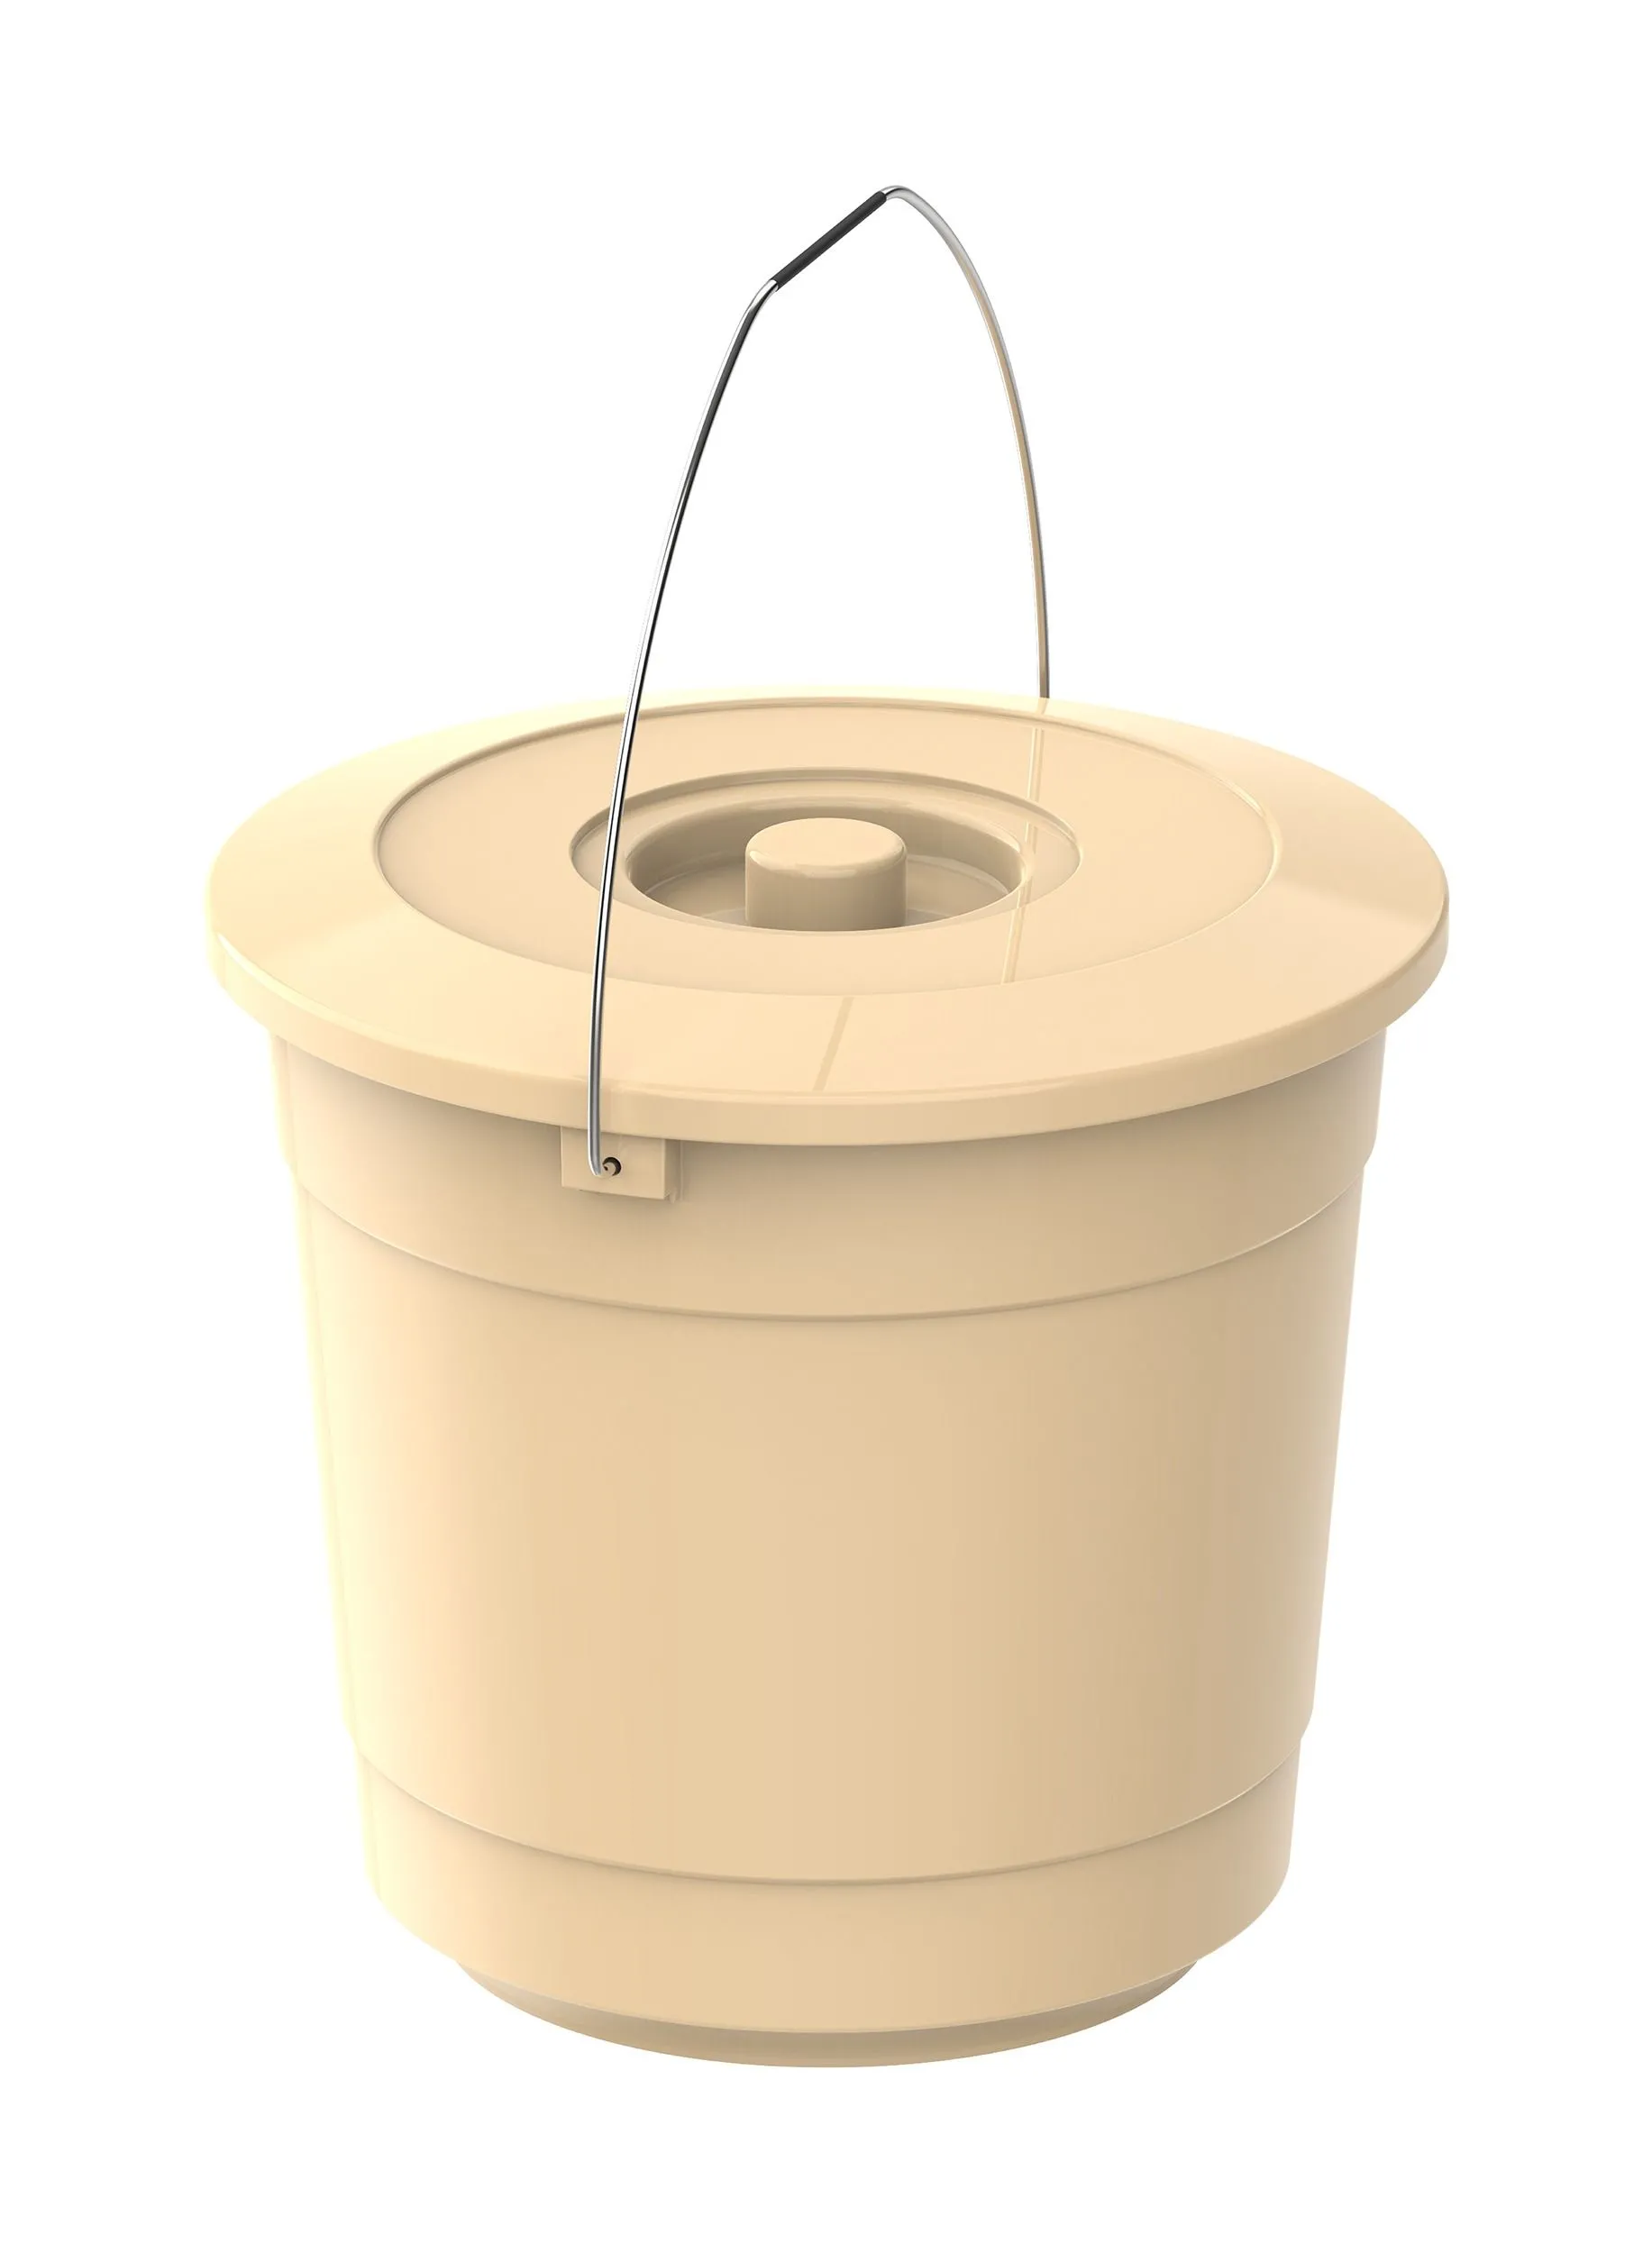 Cosmoplast EX 10L Round Plastic Bucket with Steel Handle